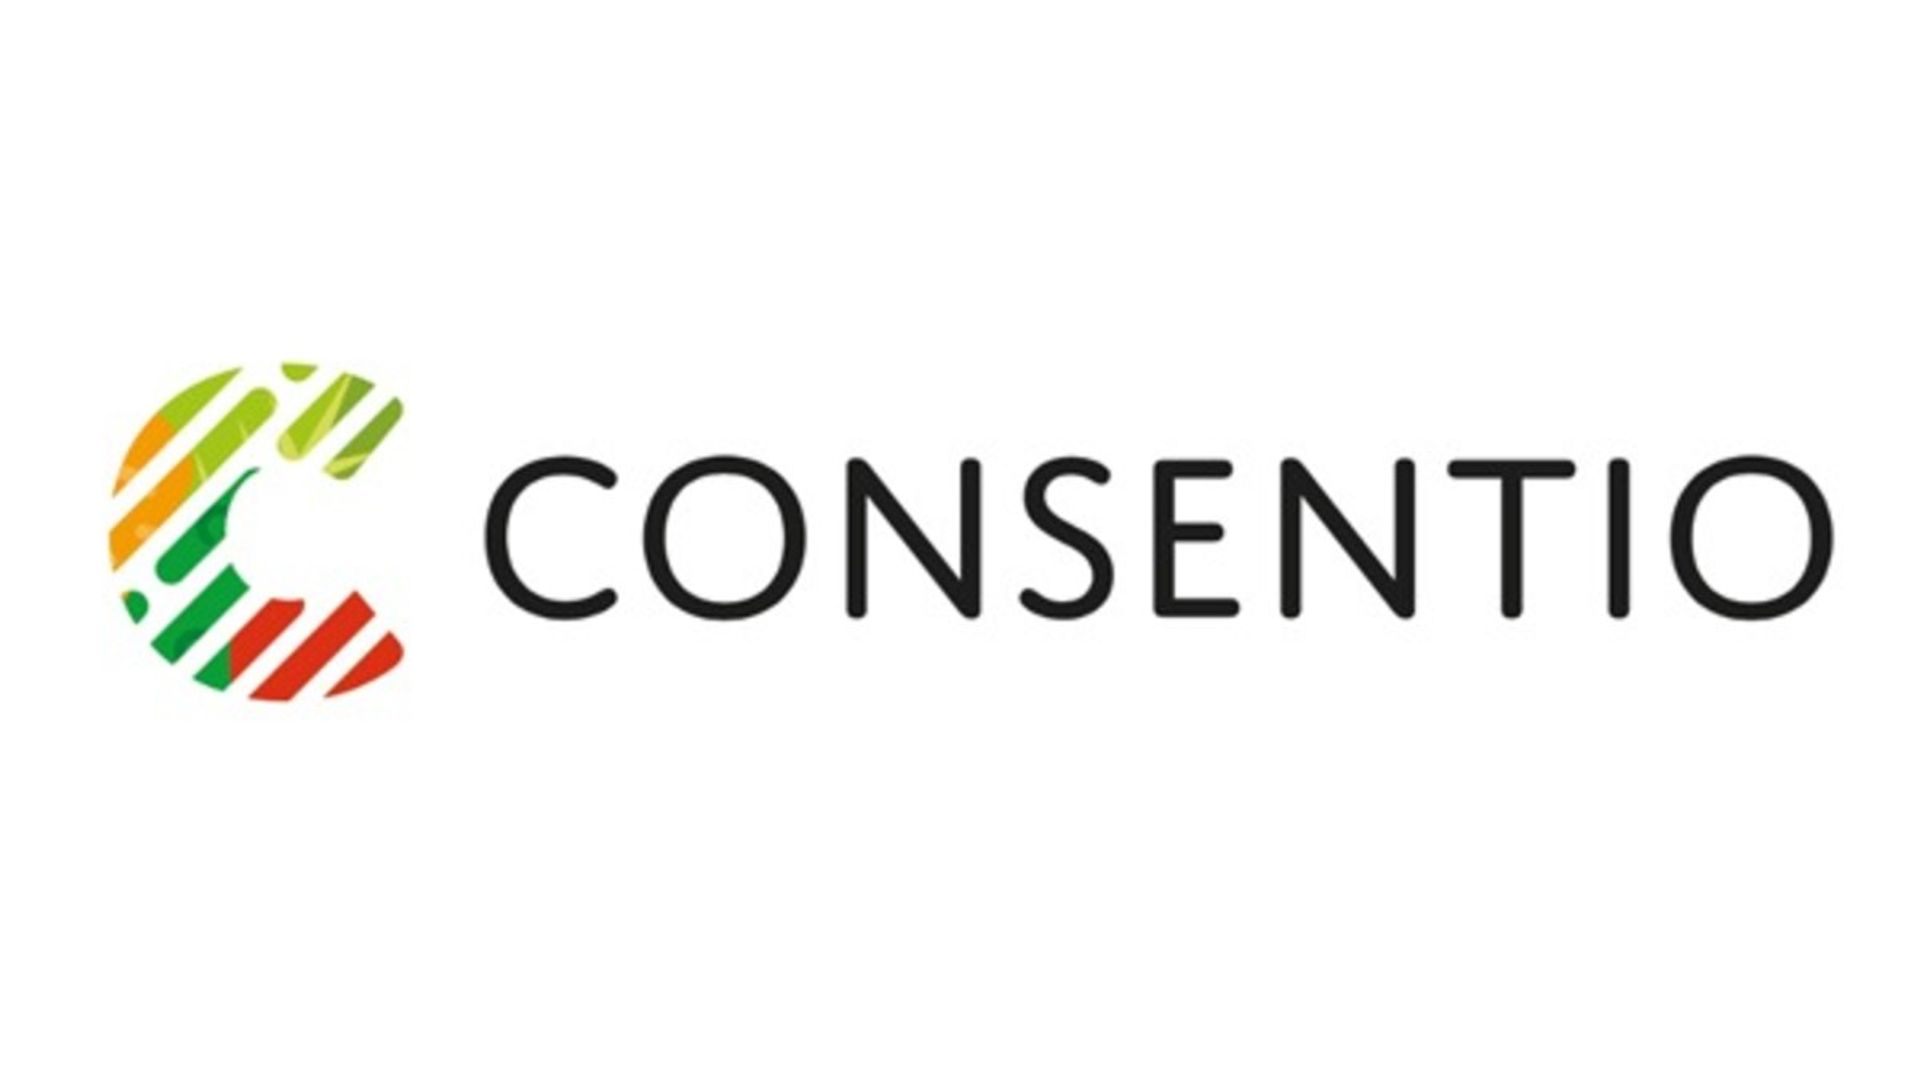 Image of the Consentio logo